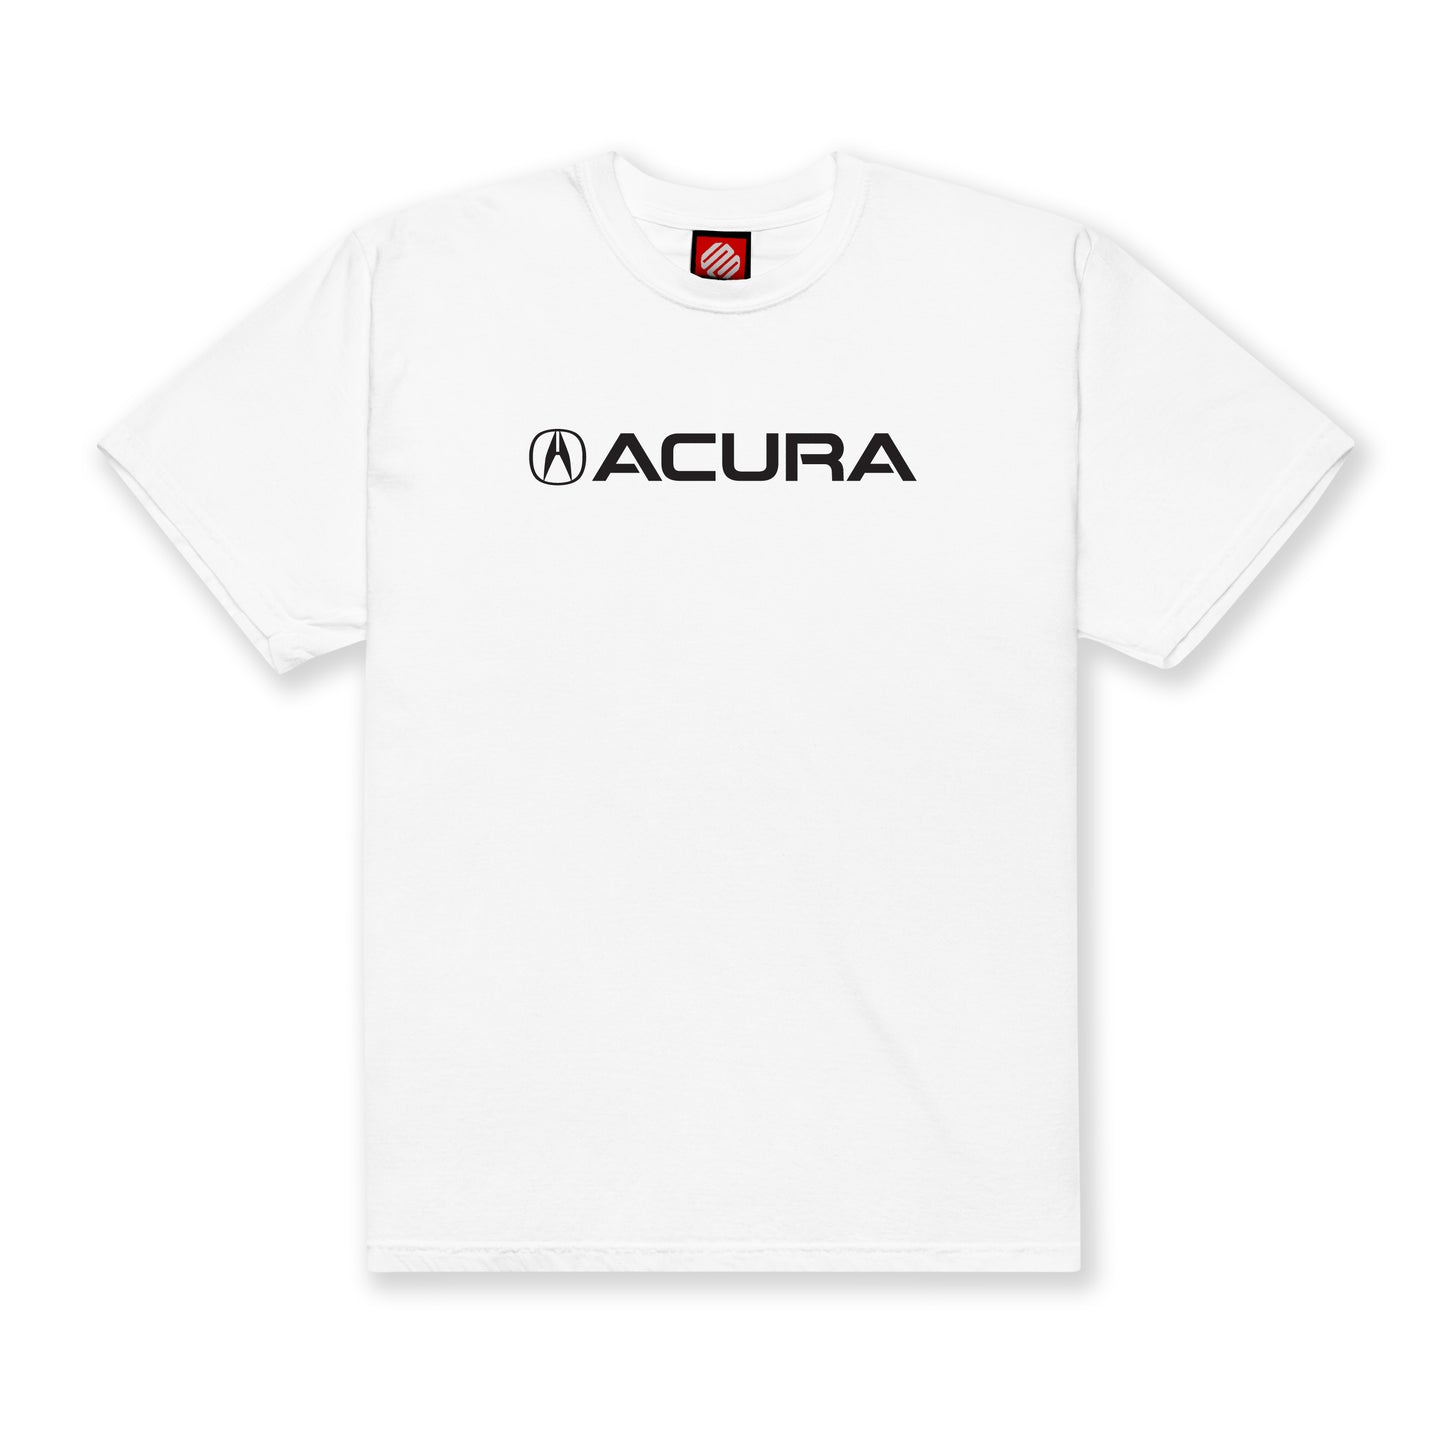 SGR x Acura Logo USDM + JDM - White